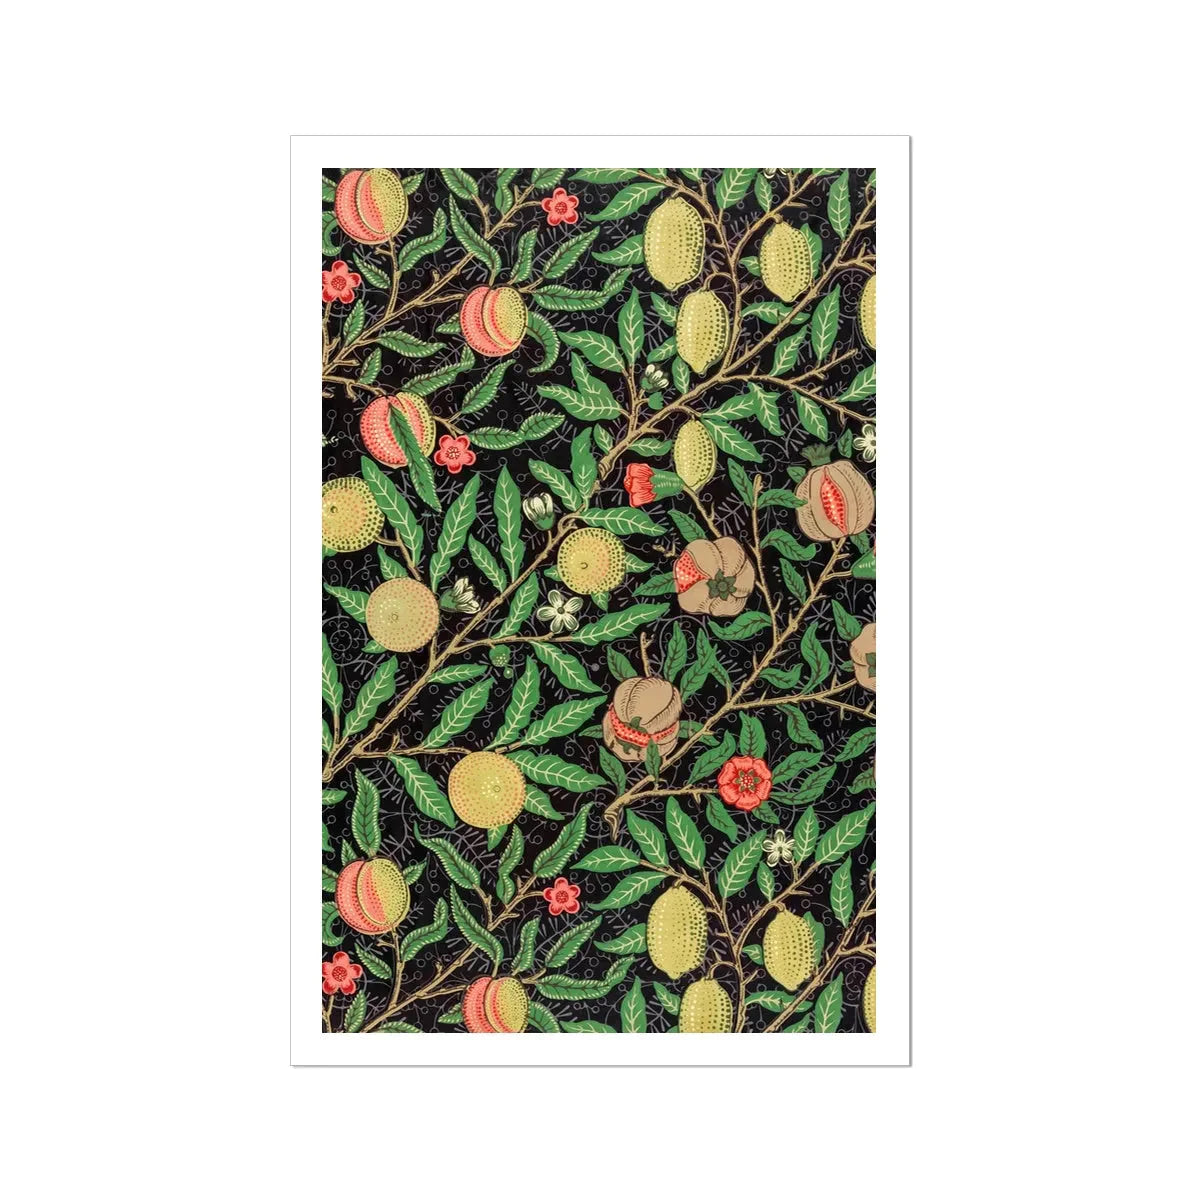 Four Fruits Too - William Morris Botanicals Art Print - 24’x36’ - Posters Prints & Visual Artwork - Aesthetic Art